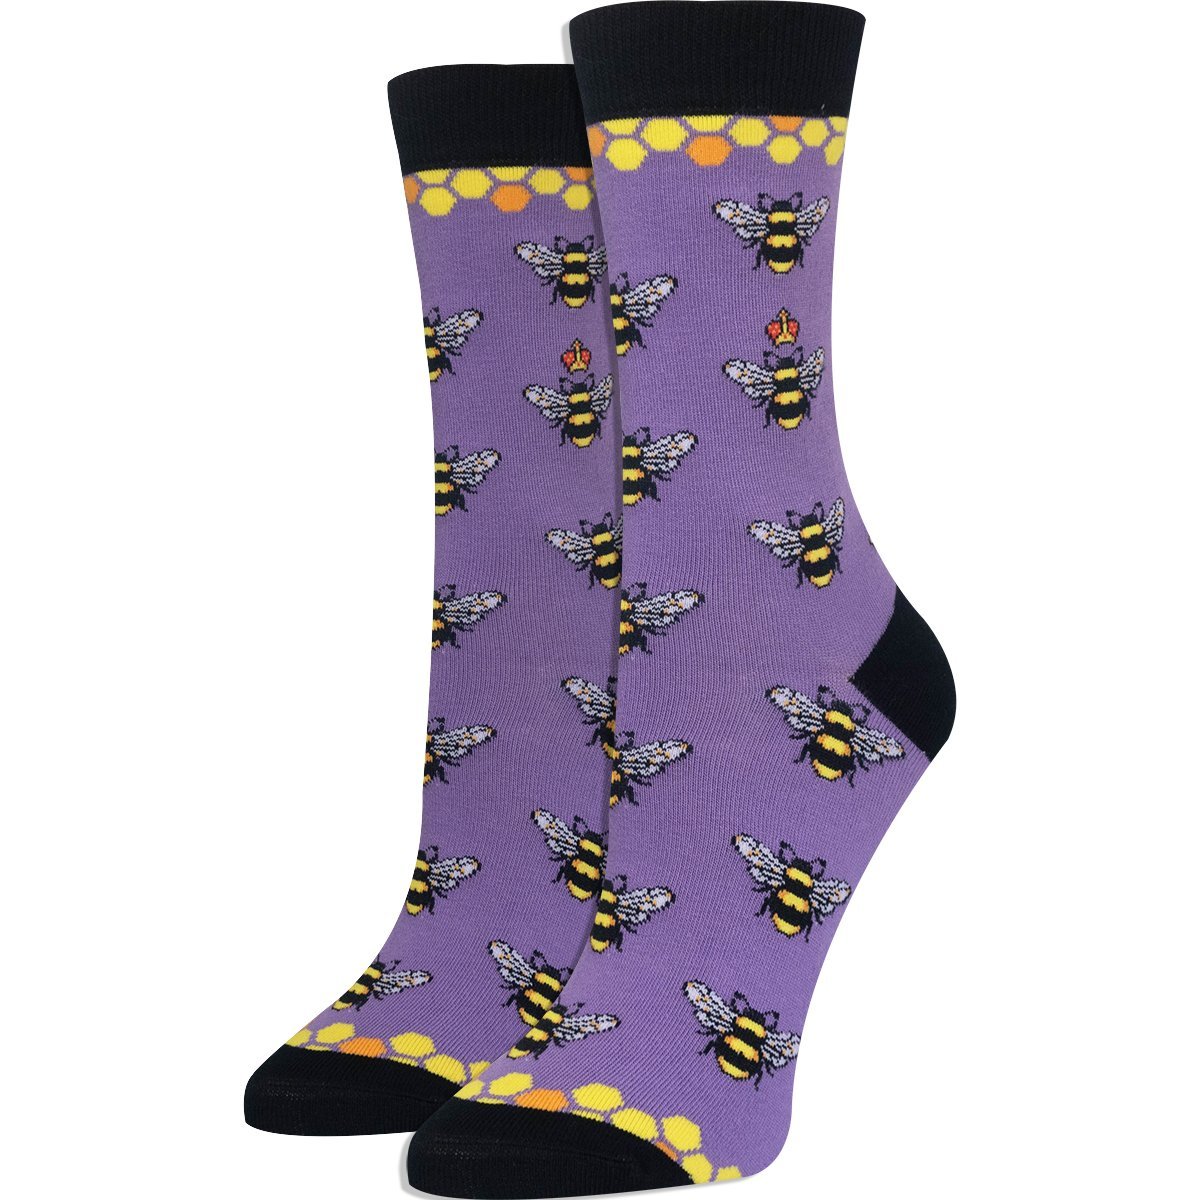 Bee Socks - Imagery Socks